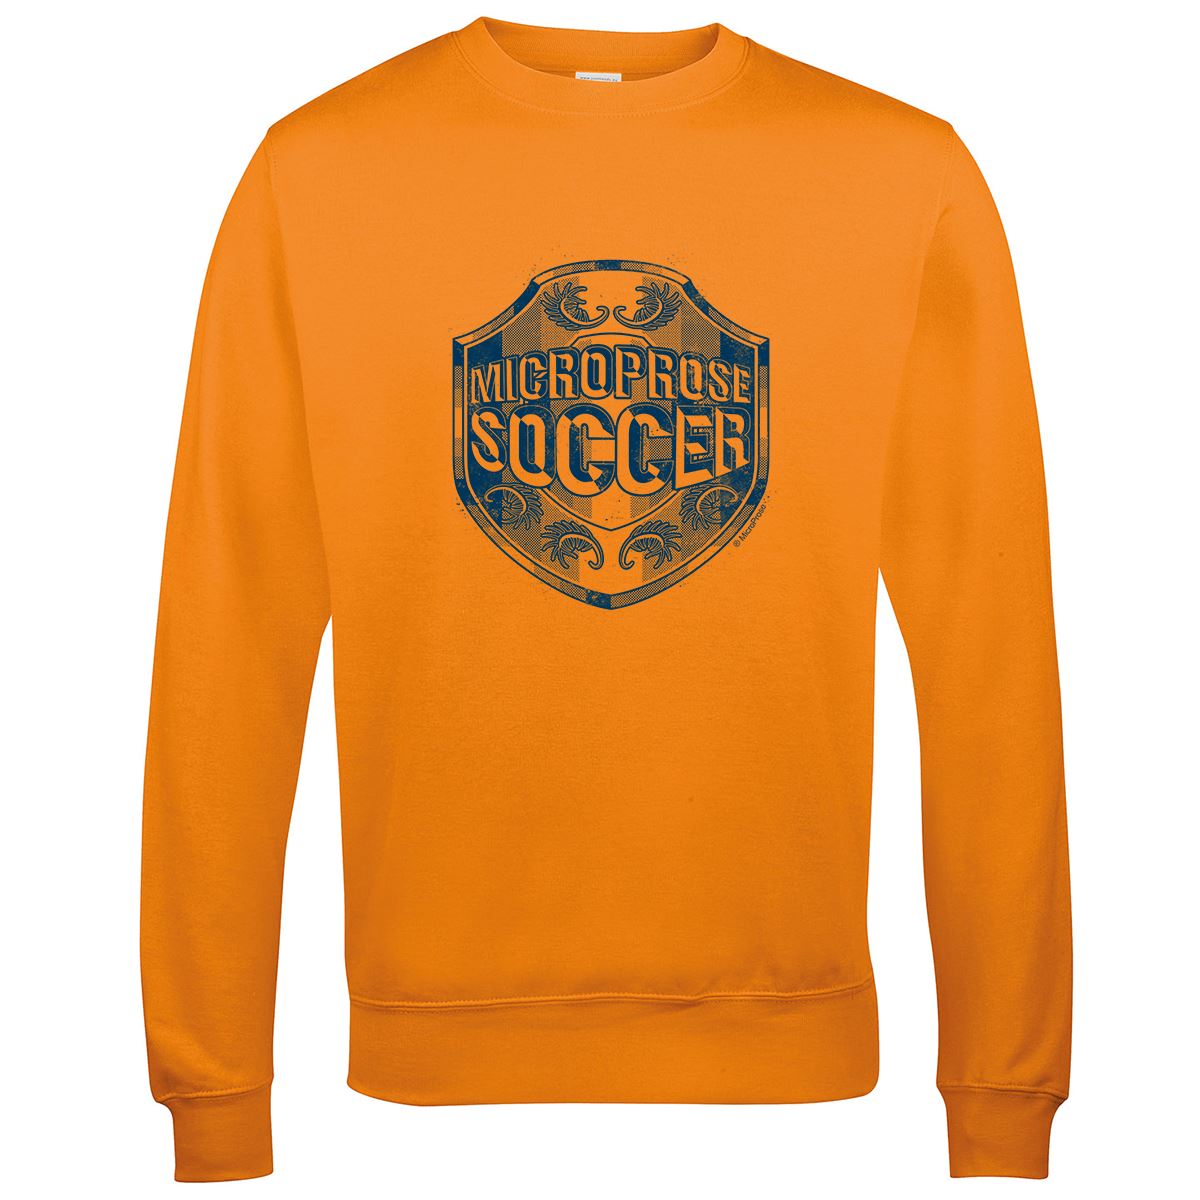 Microprose Soccer Games Retro Gaming Sweatshirt Sweatshirt Seven Squared Small Orange Crush 